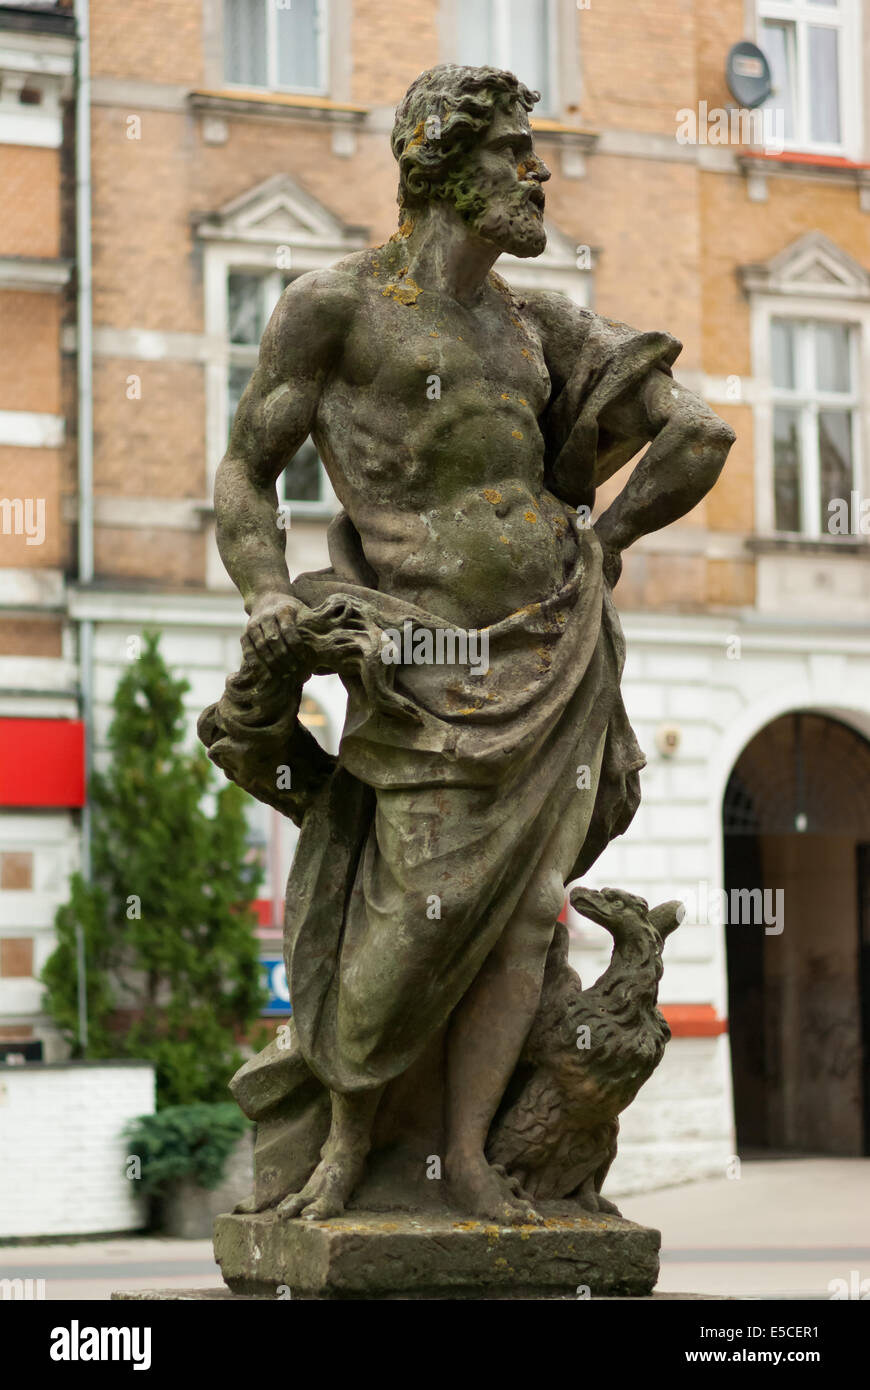 Jove statue, Ilawa, northern Poland Stock Photo